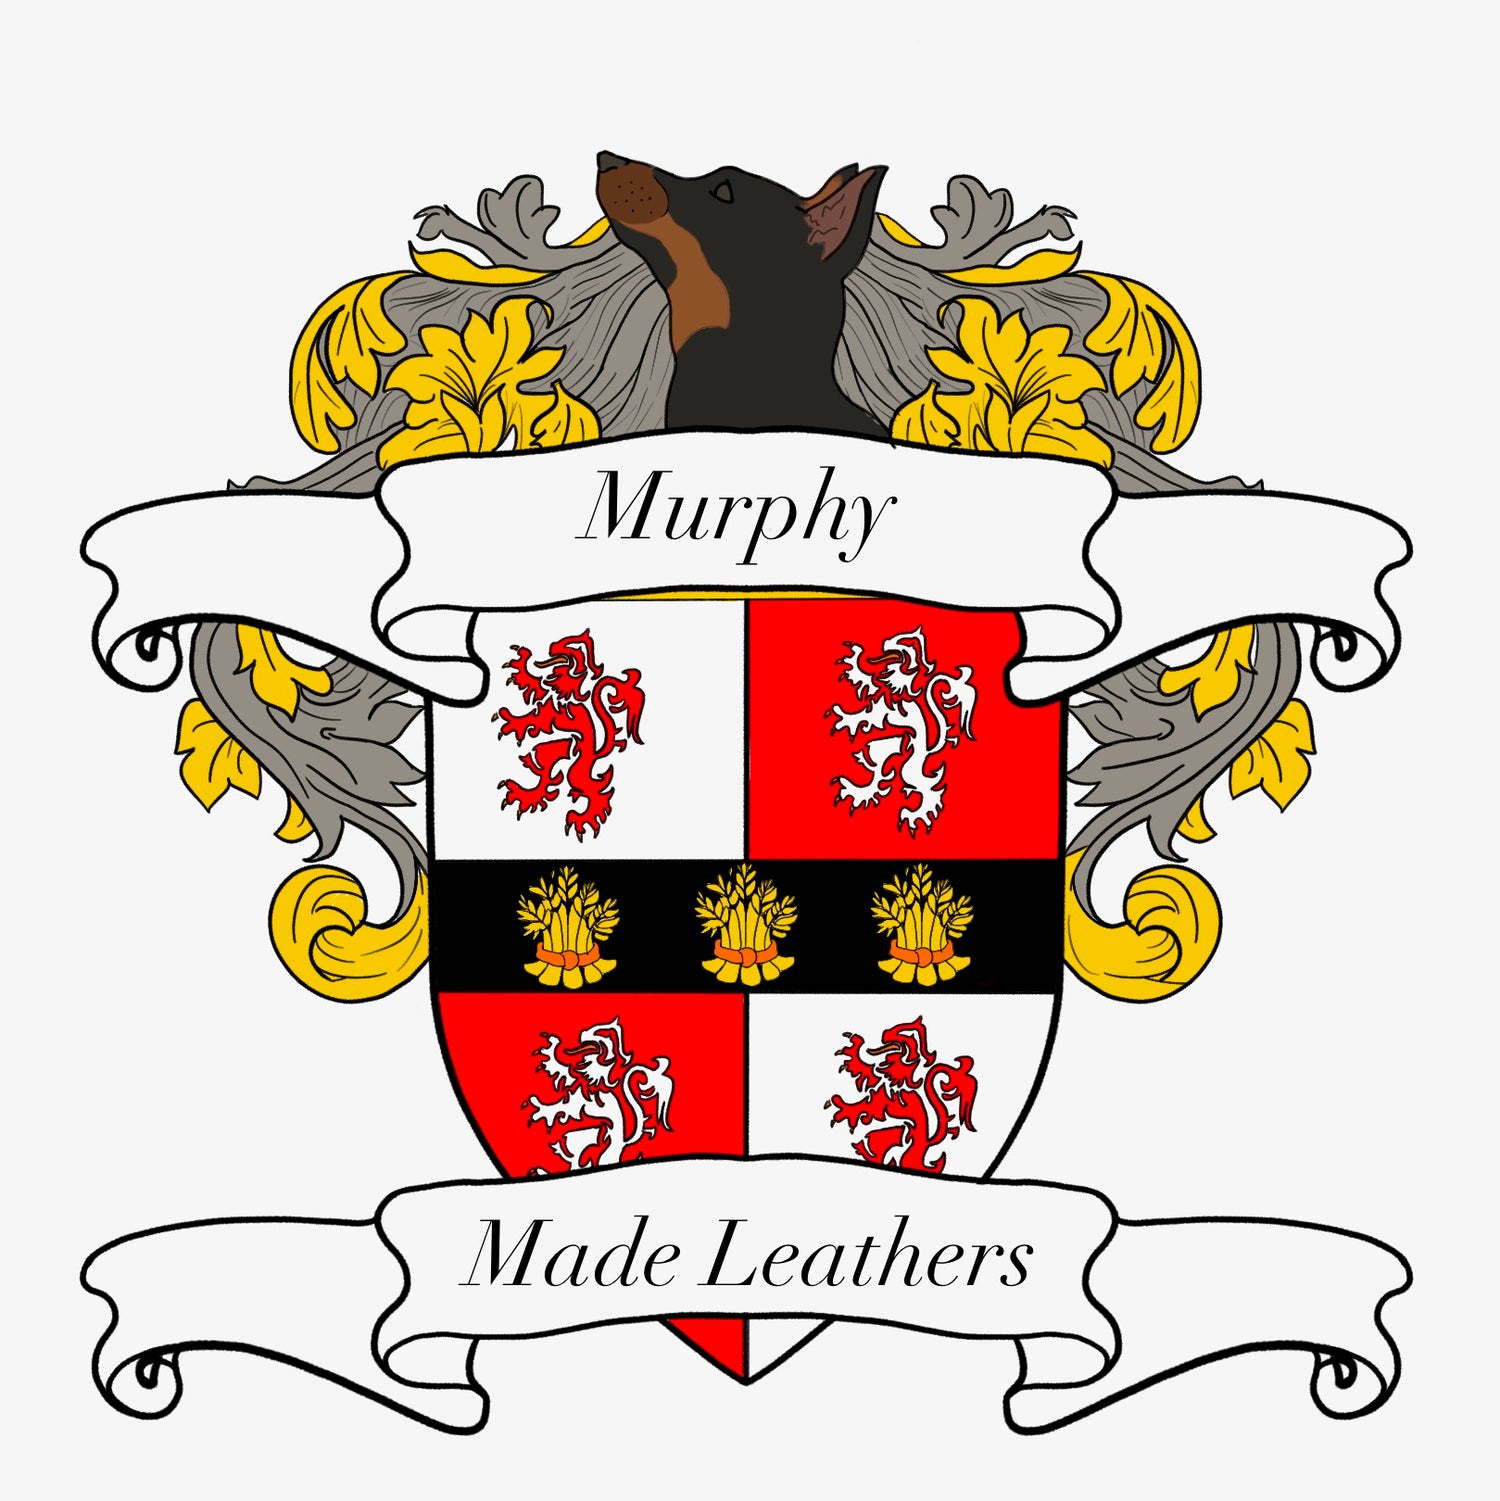 Murphy Made Leathers